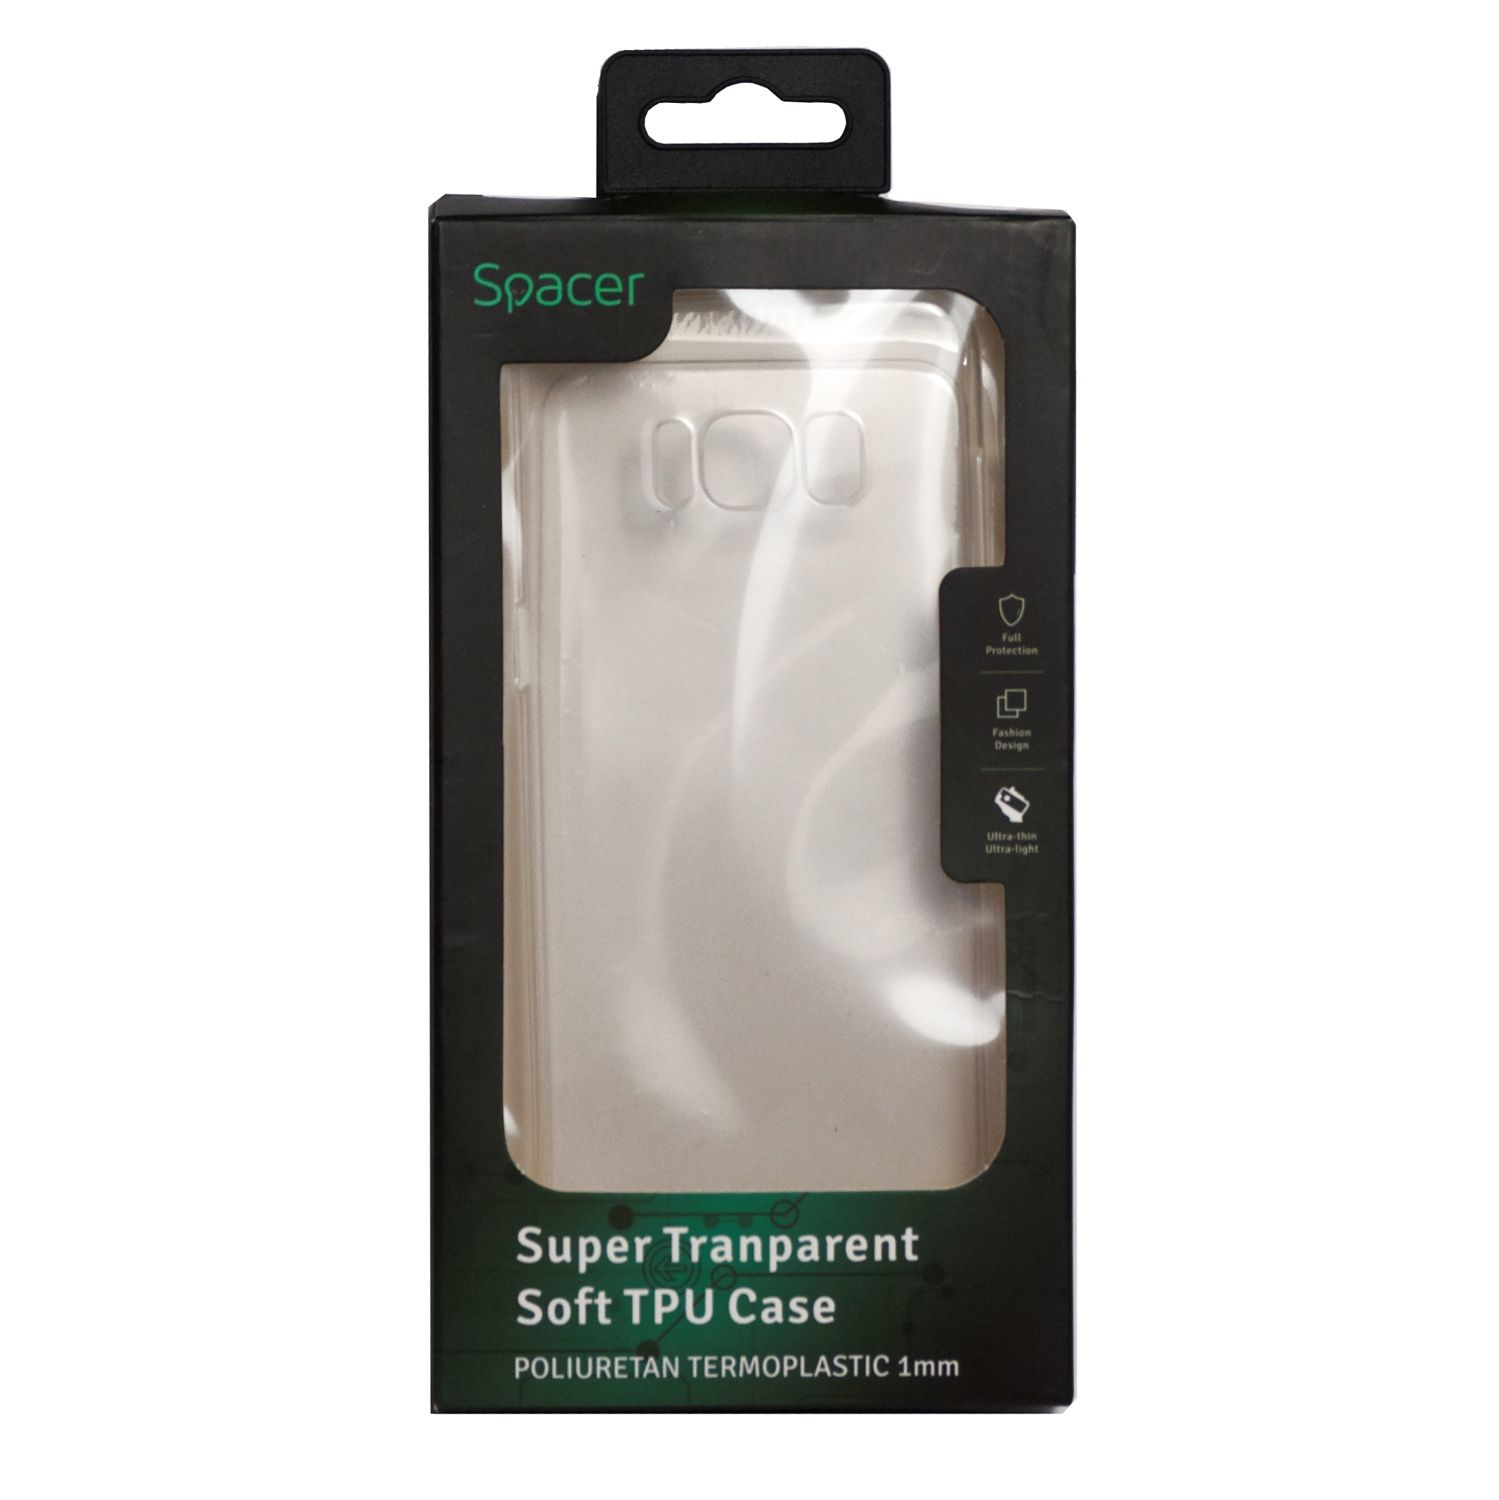 Husa telefon SuperTransparenta Spacer pentru Samsung S8, 